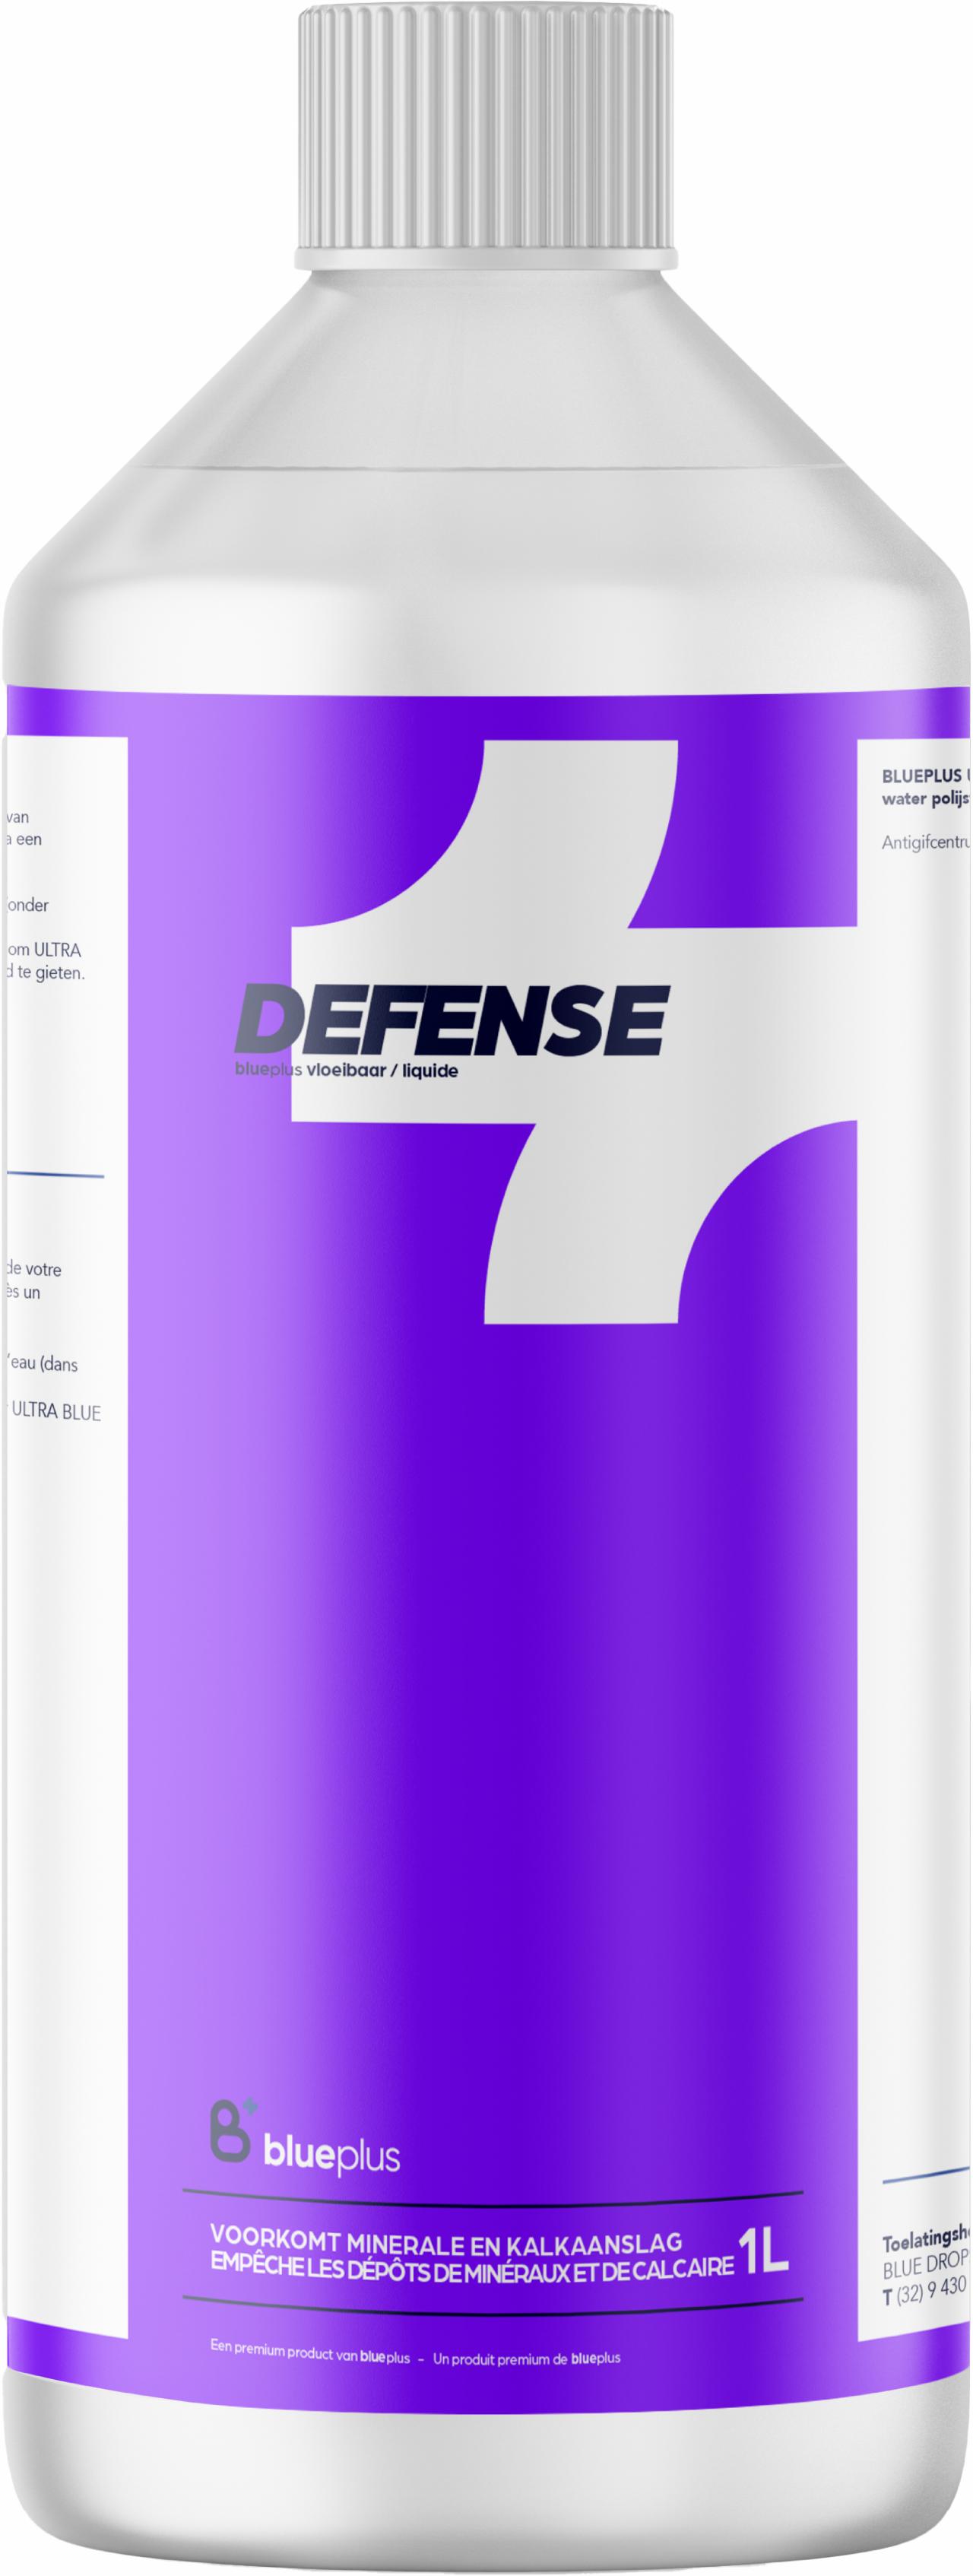 blueplus Defense - Whirlpool protect 1l